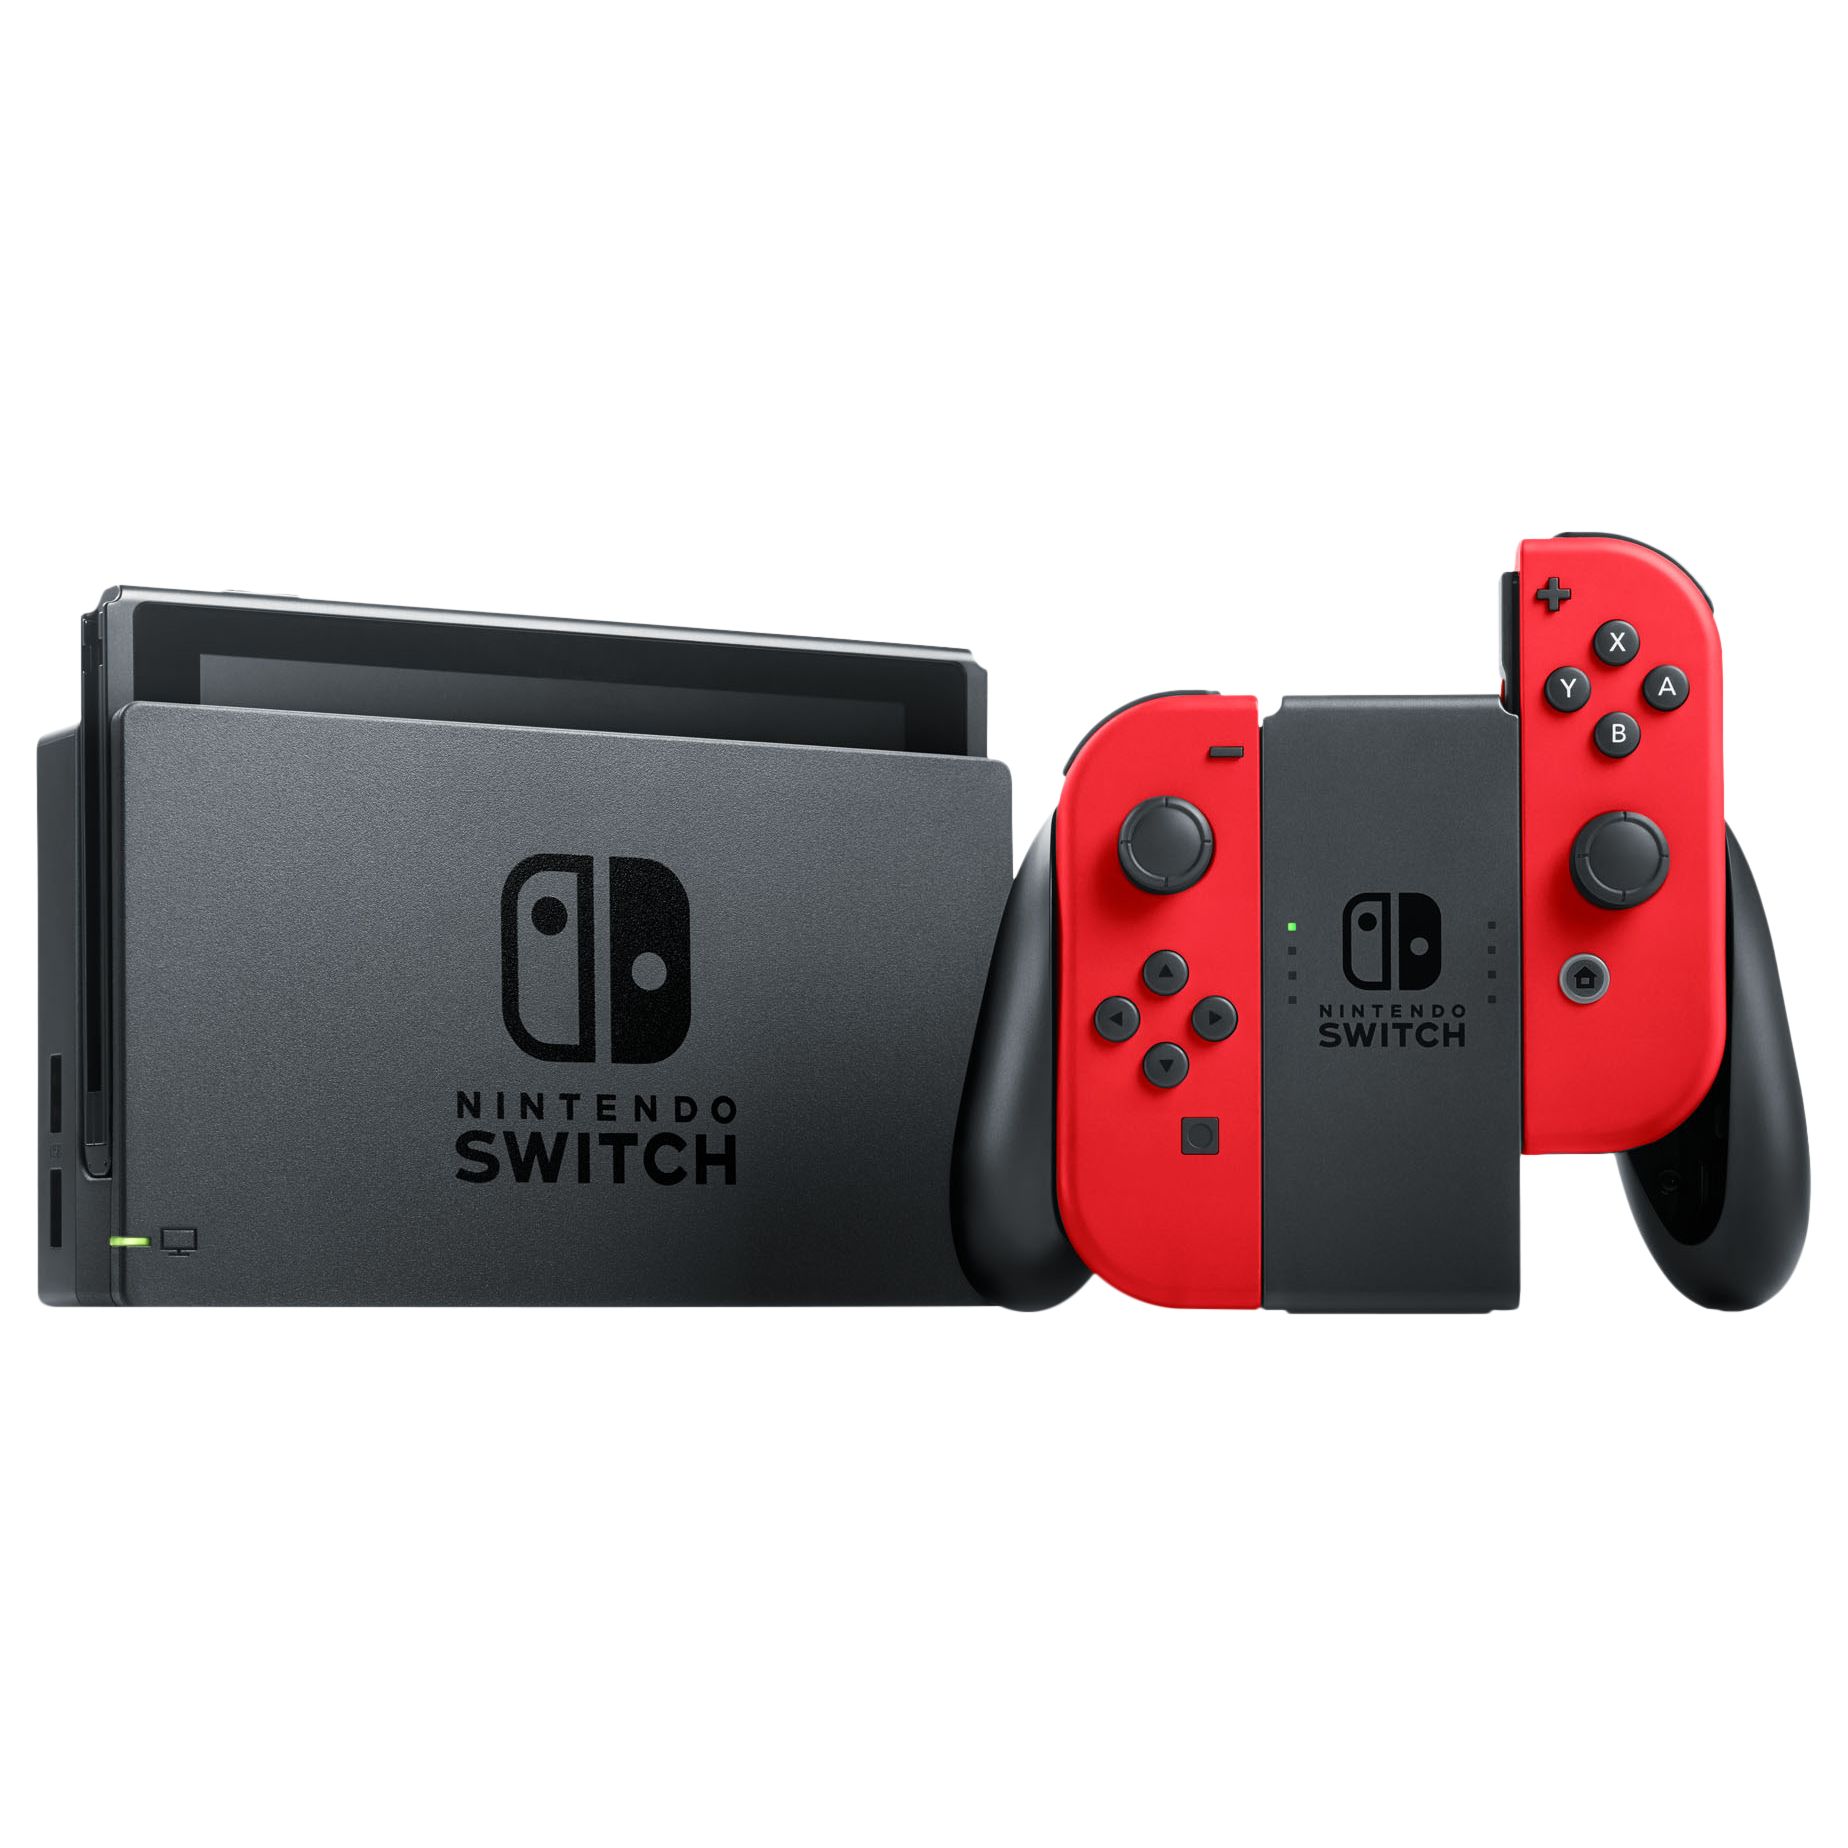 Nintendo switch old. Приставка Нинтендо свитч. Игровая приставка Nintendo Switch. Игровая приставка Nintendo Switch 2. Nintendo Switch Hac-001.